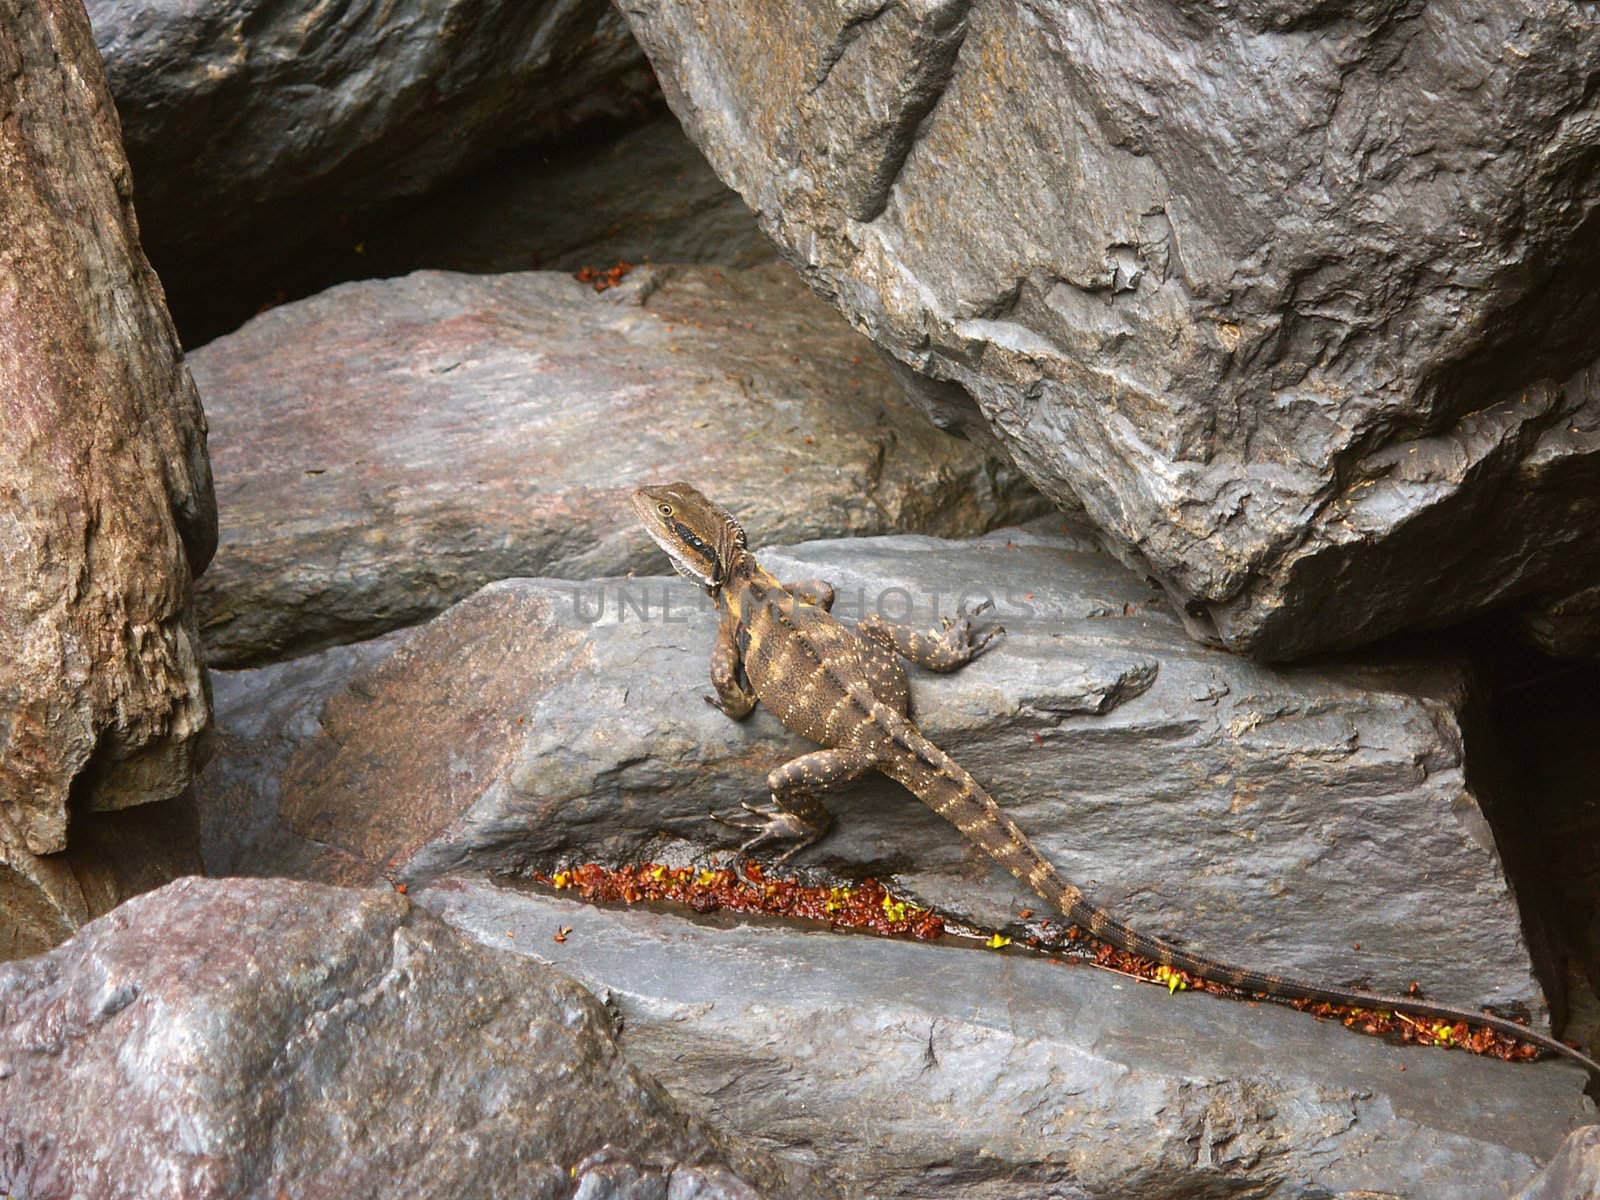 An Australian Water Dragon (Physignathus lesueurii) basks on a rock in Barron Gorge - Queensland, Australia.